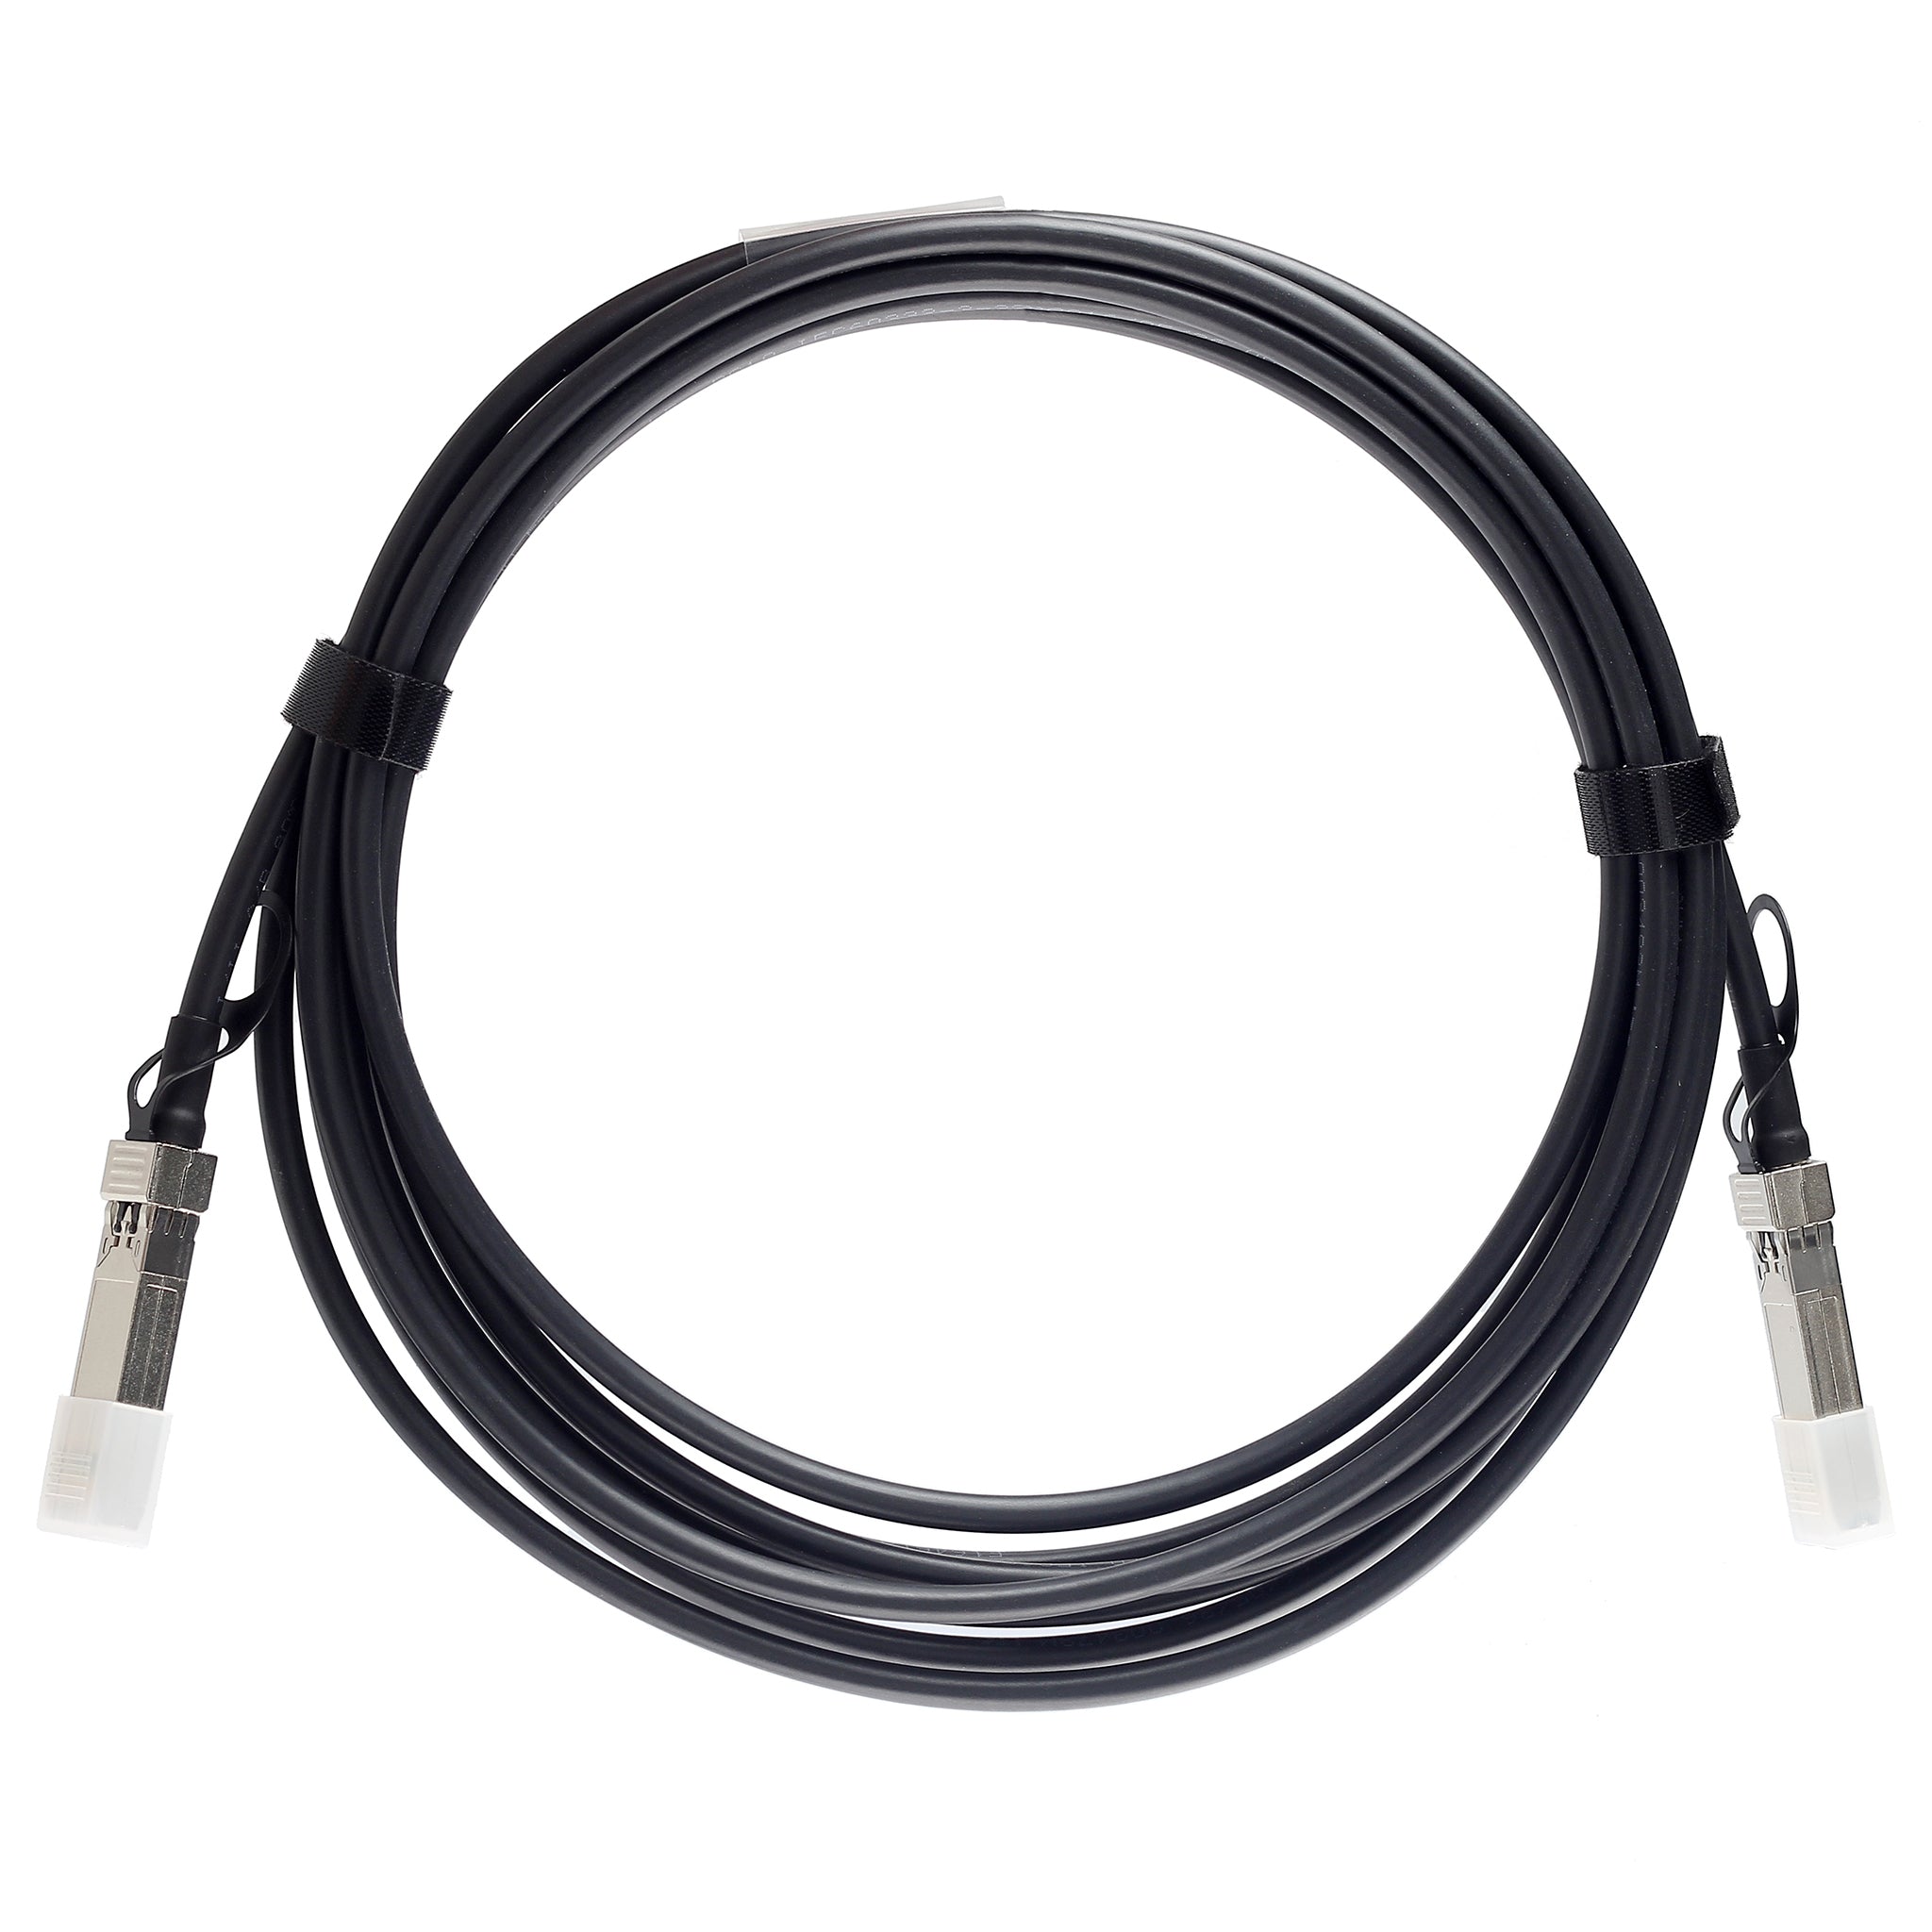 AT-QSFP5CU-C - 5m Allied Telesis Compatible 40G QSFP+ Passive Direct Attach Copper Twinax Cable